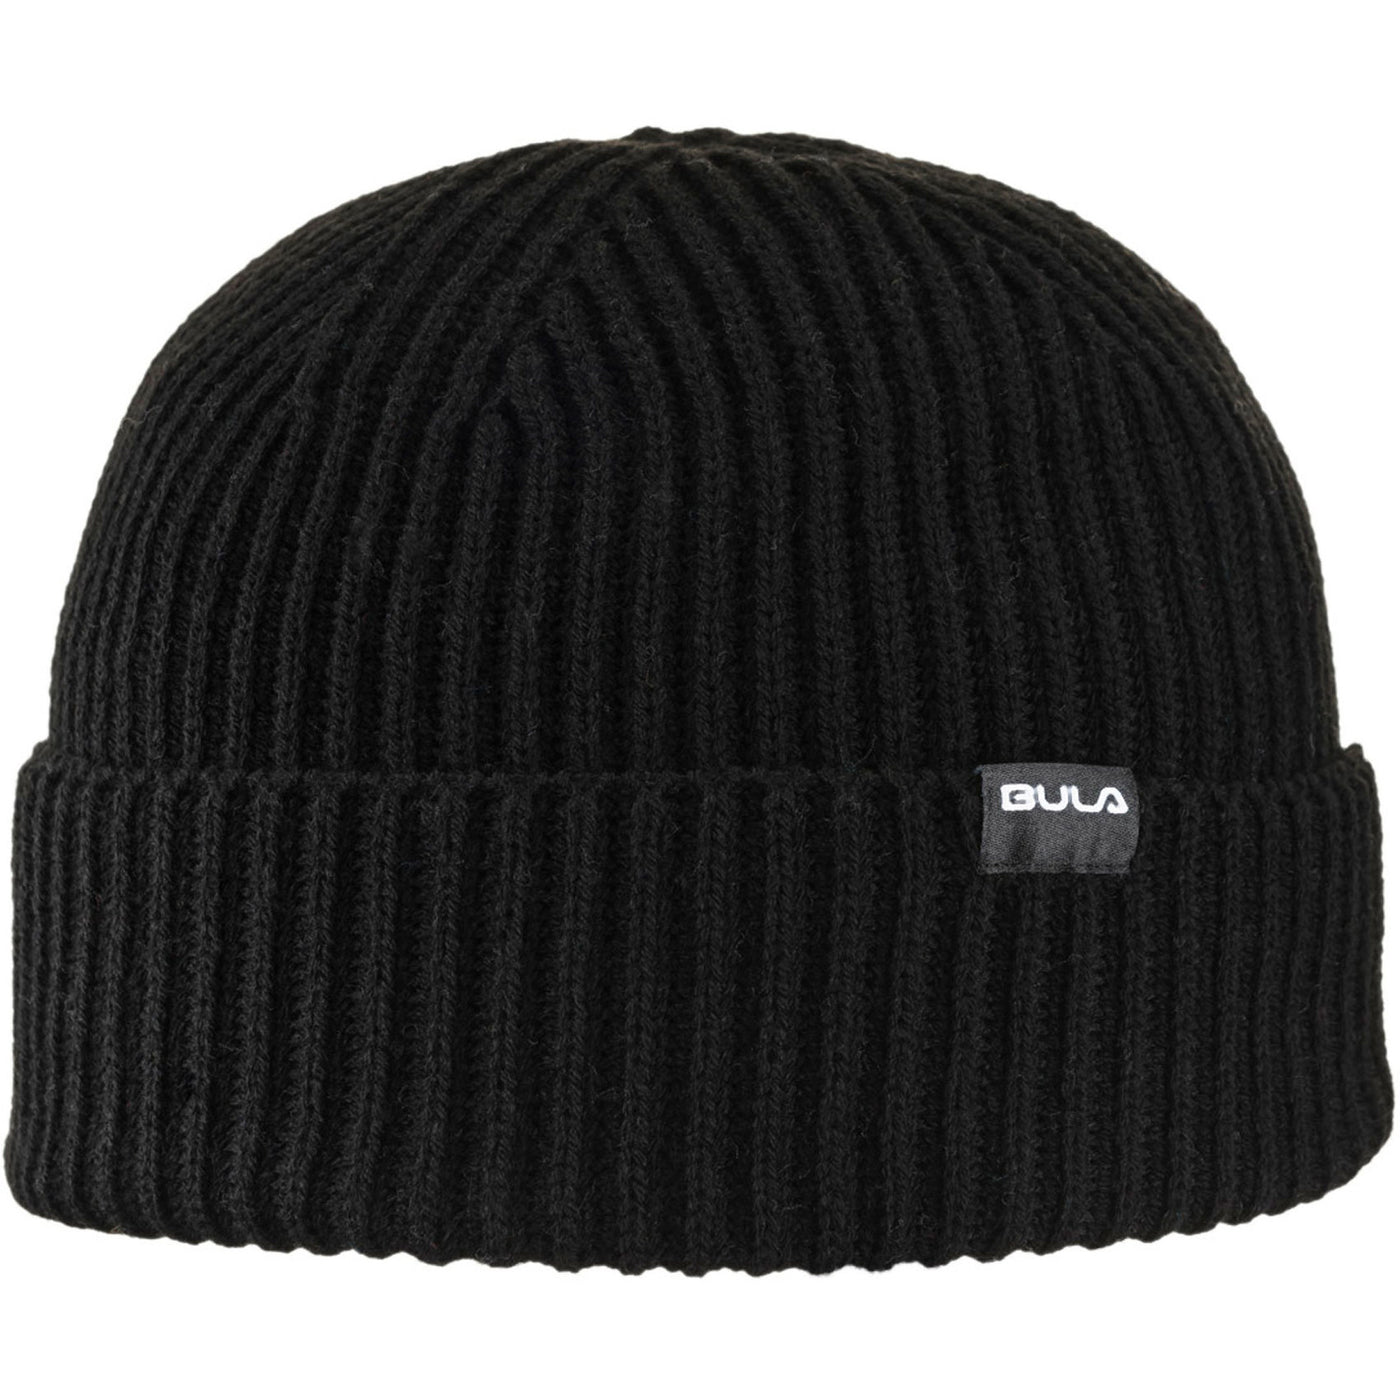 Eli Beanie Village Ski Hut Bula Hats/Toques/Face, softgoods accessories, Winter 2023